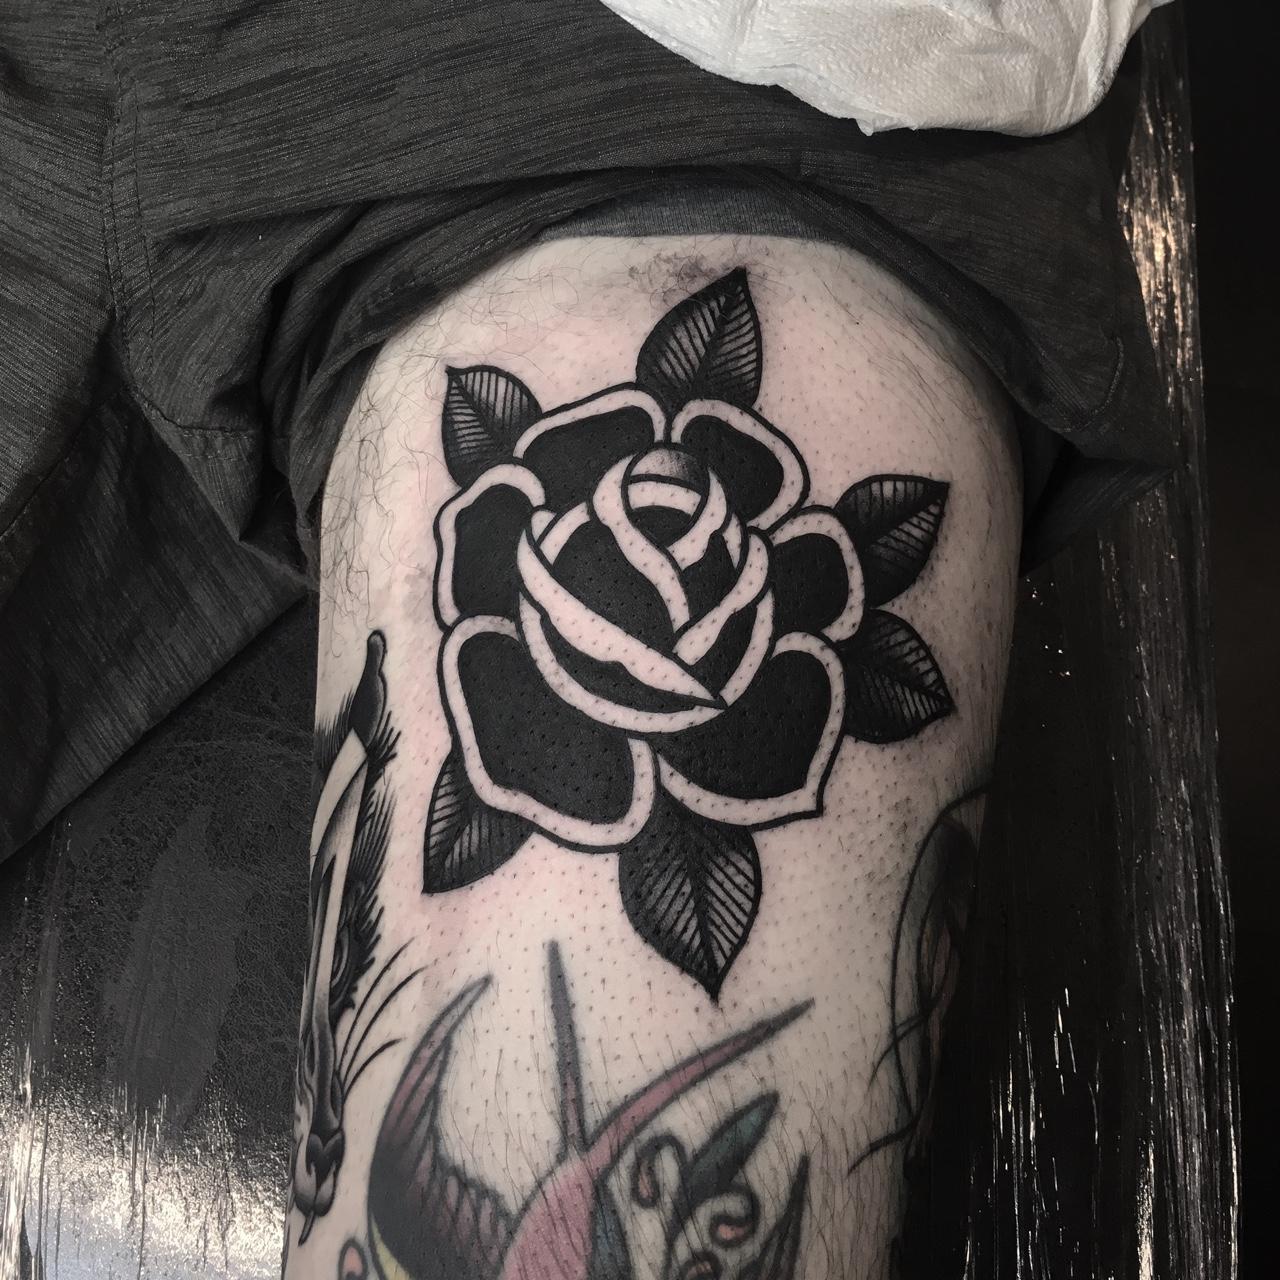 Brooke Cool Watercolor Splat Black Floral Rose Temporary Tattoo – MyBodiArt